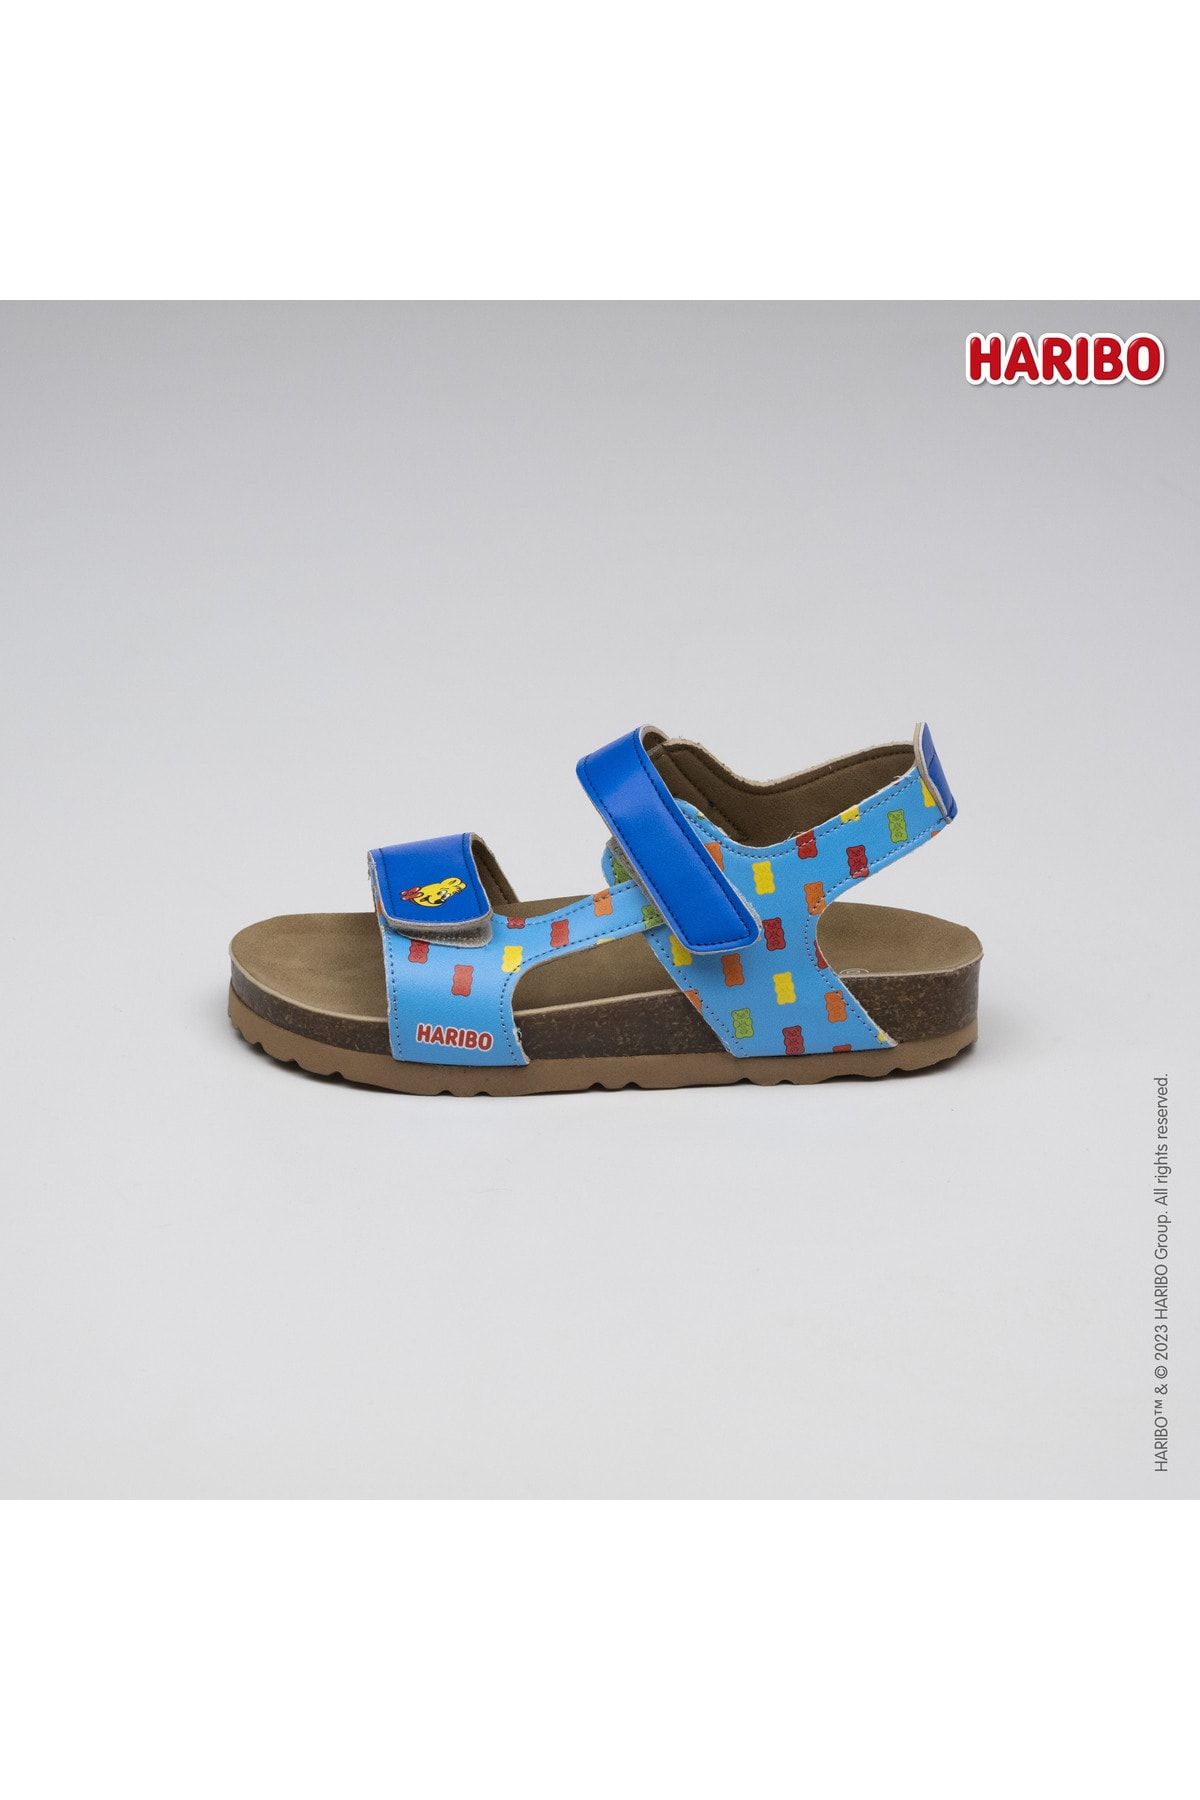 Haribo Bear Face Sandalet